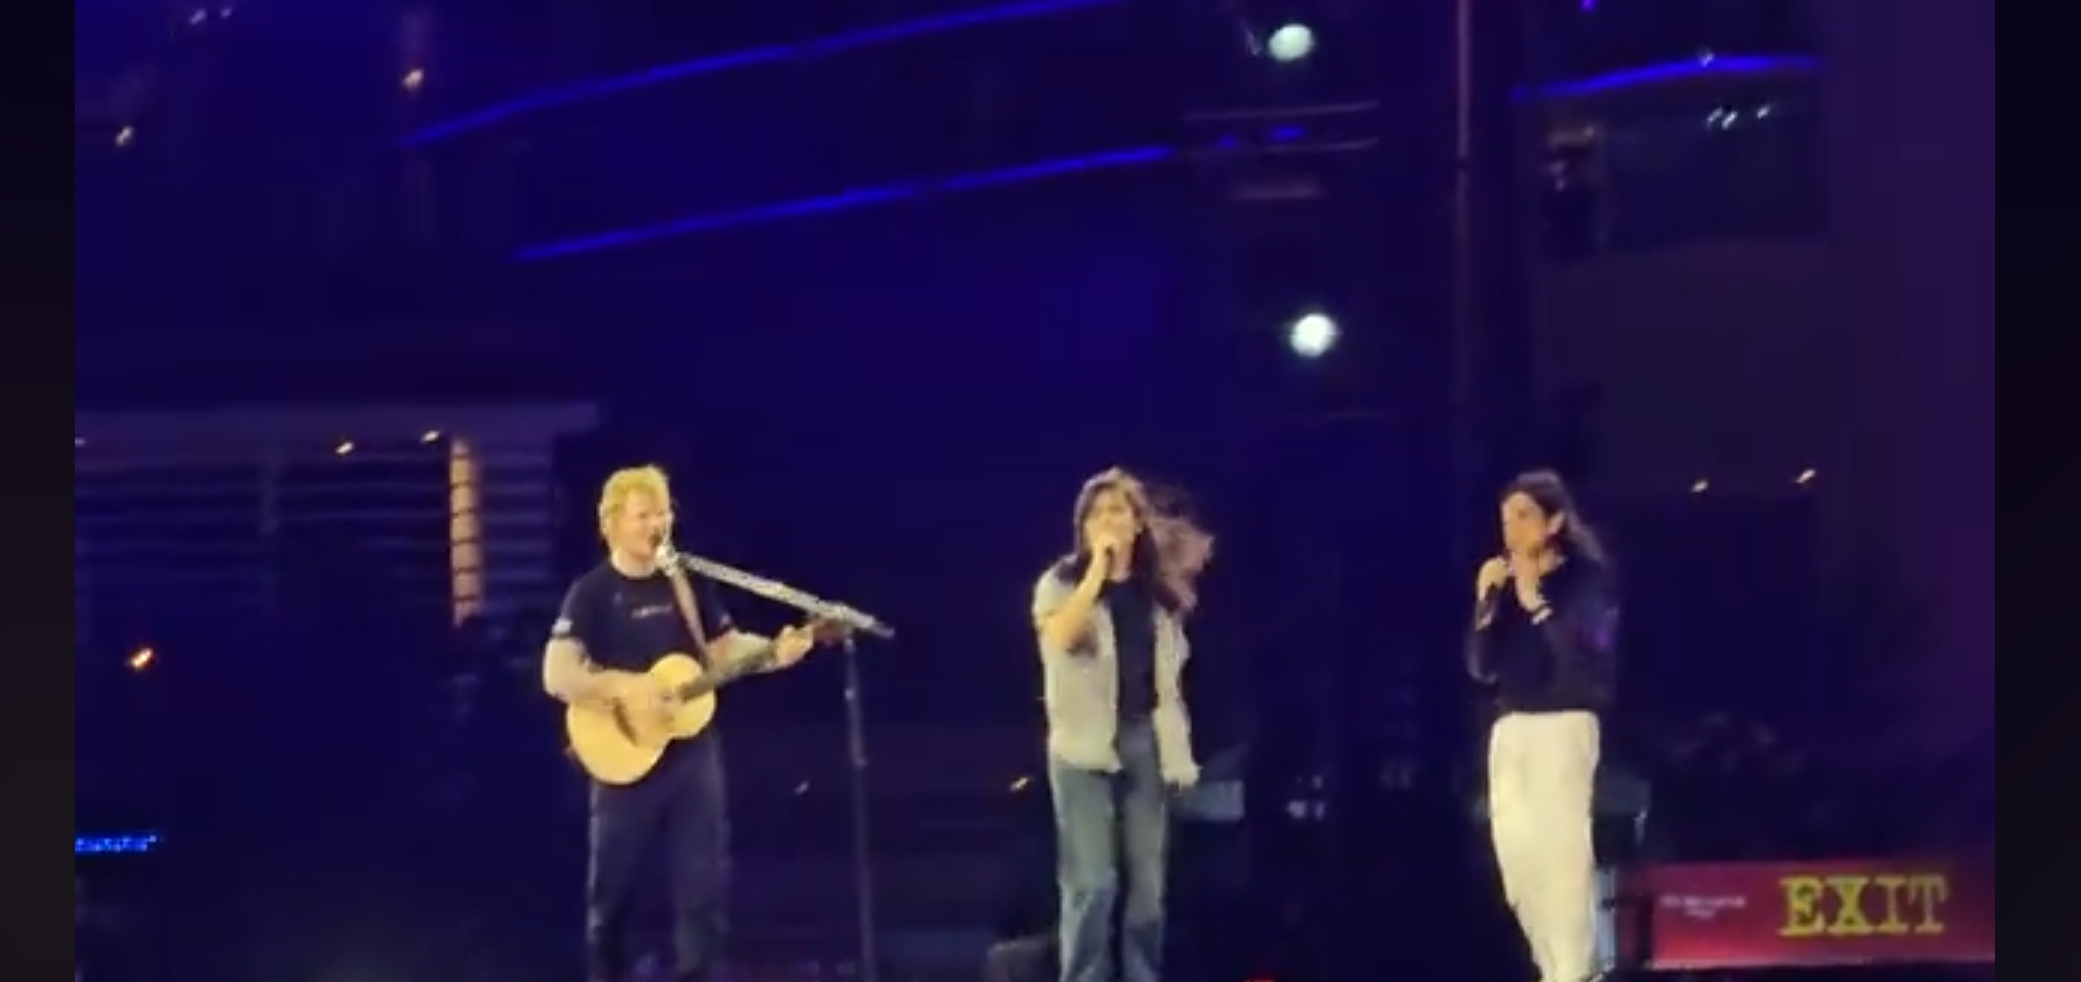 Ed Sheeran sings Ben&Ben hit song in jampacked concert PEP.ph